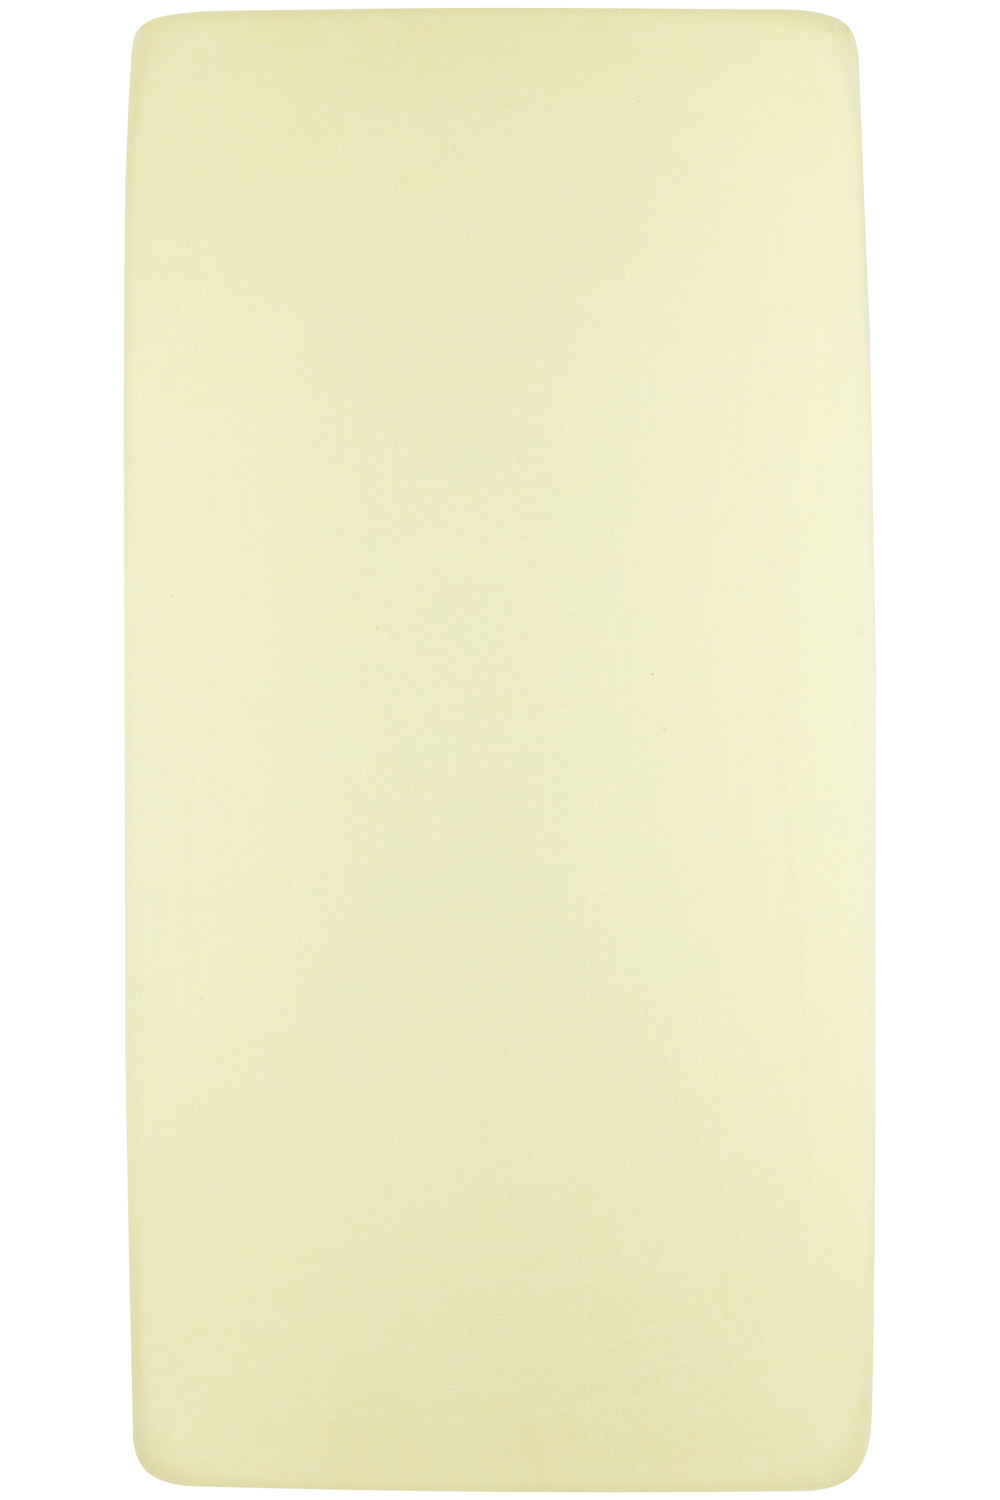 Hoeslaken wieg Uni - soft yellow - 40x80/90cm